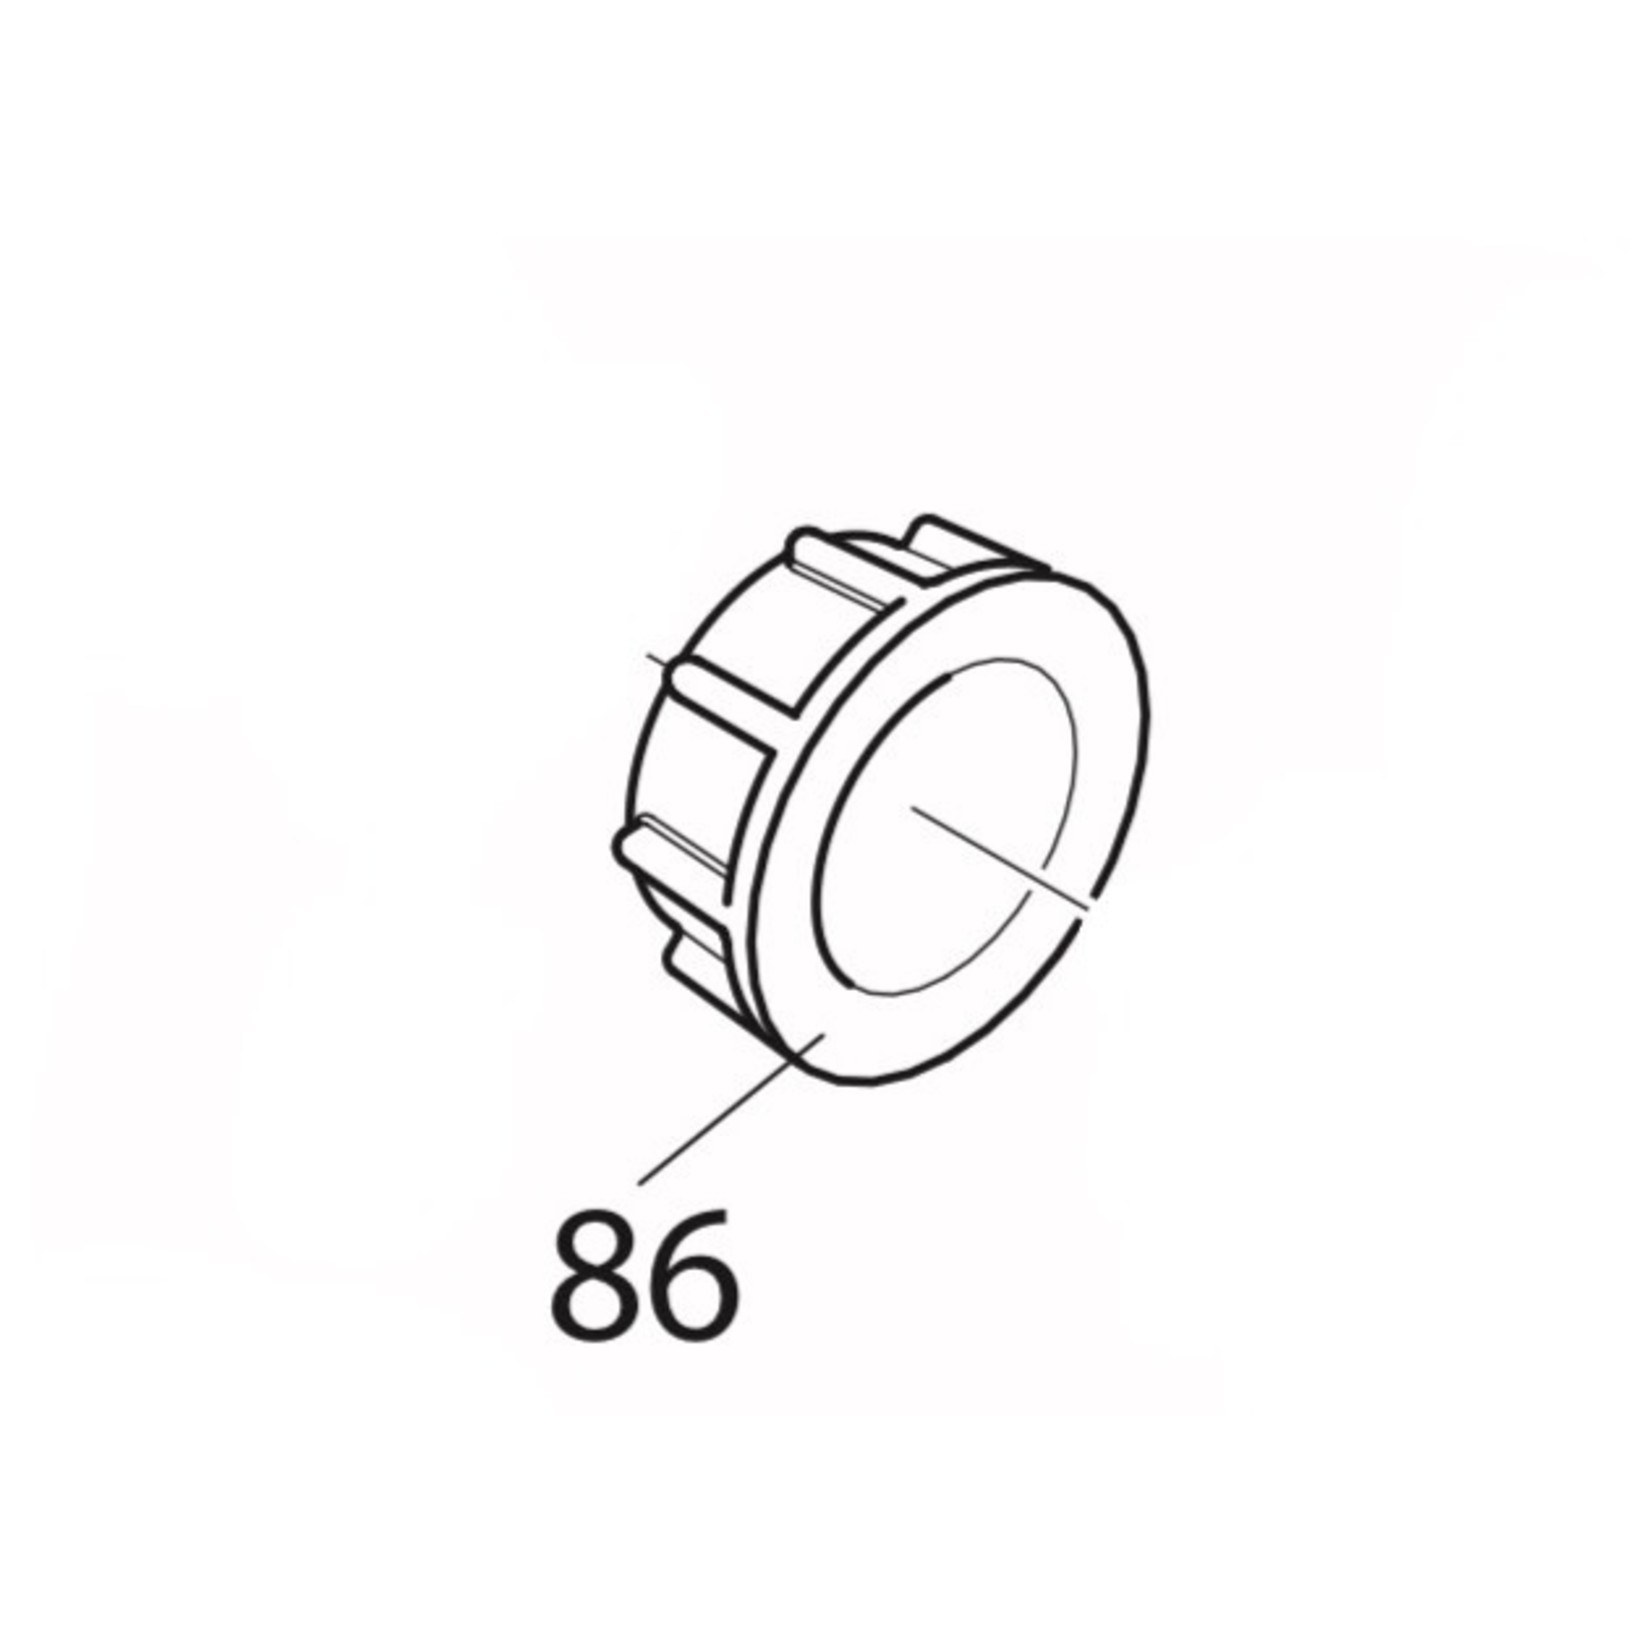 AR AR| [86] Ring Nut 3/4" G